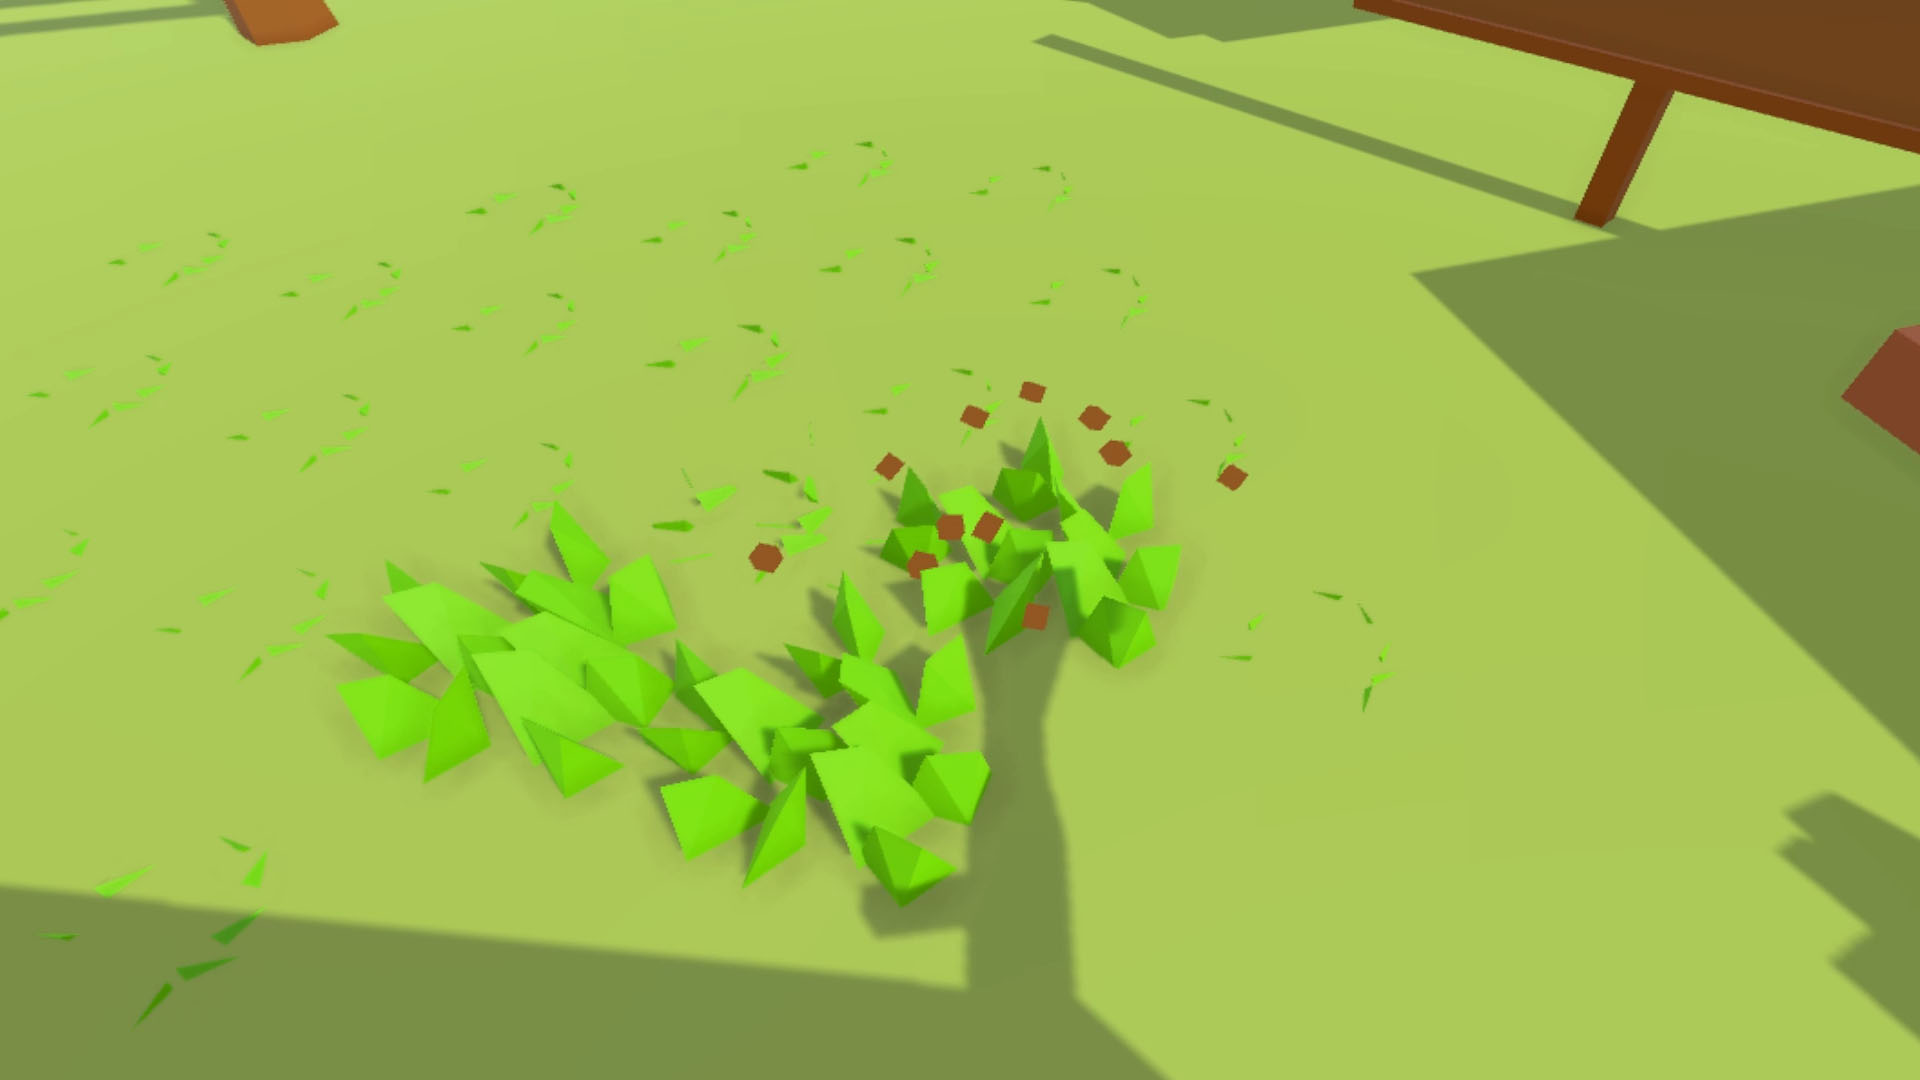 Watching Grass Grow In VR - The Game screenshot